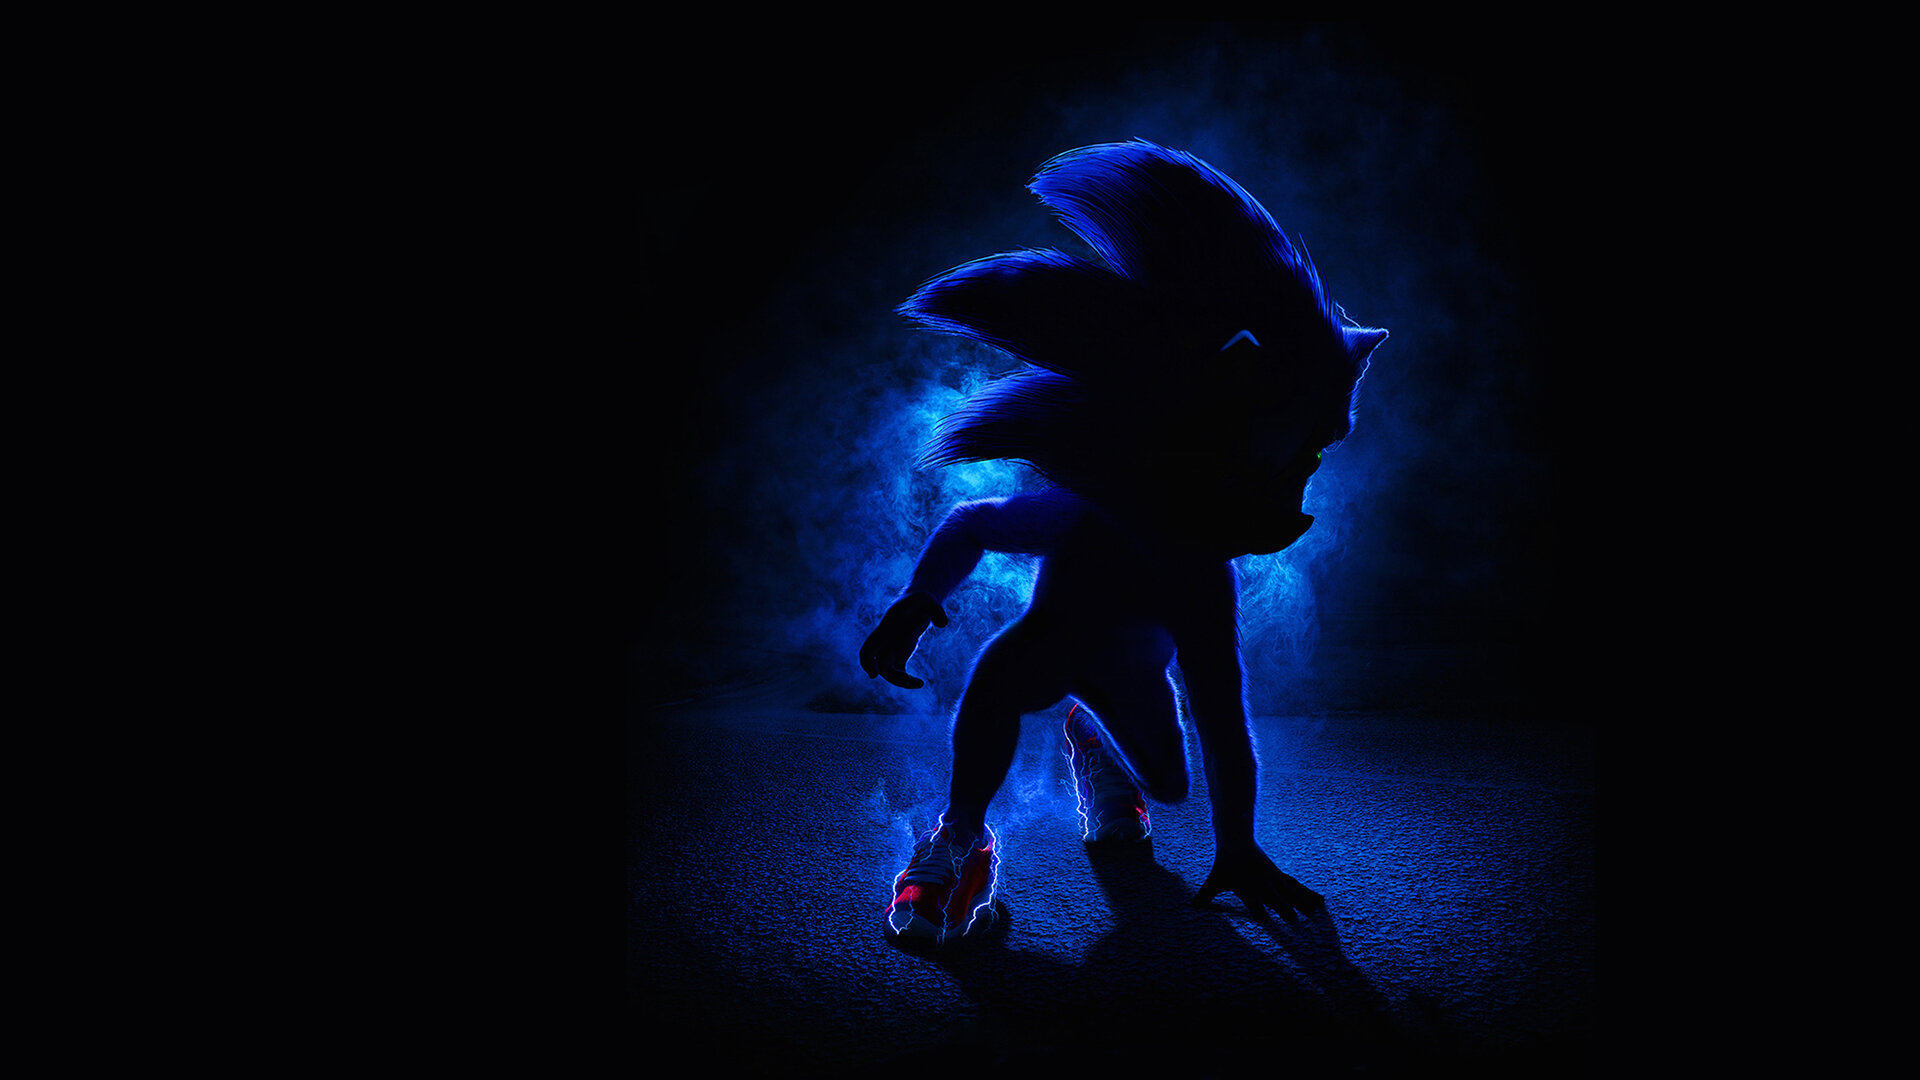 12. Sonic The Hedgehog